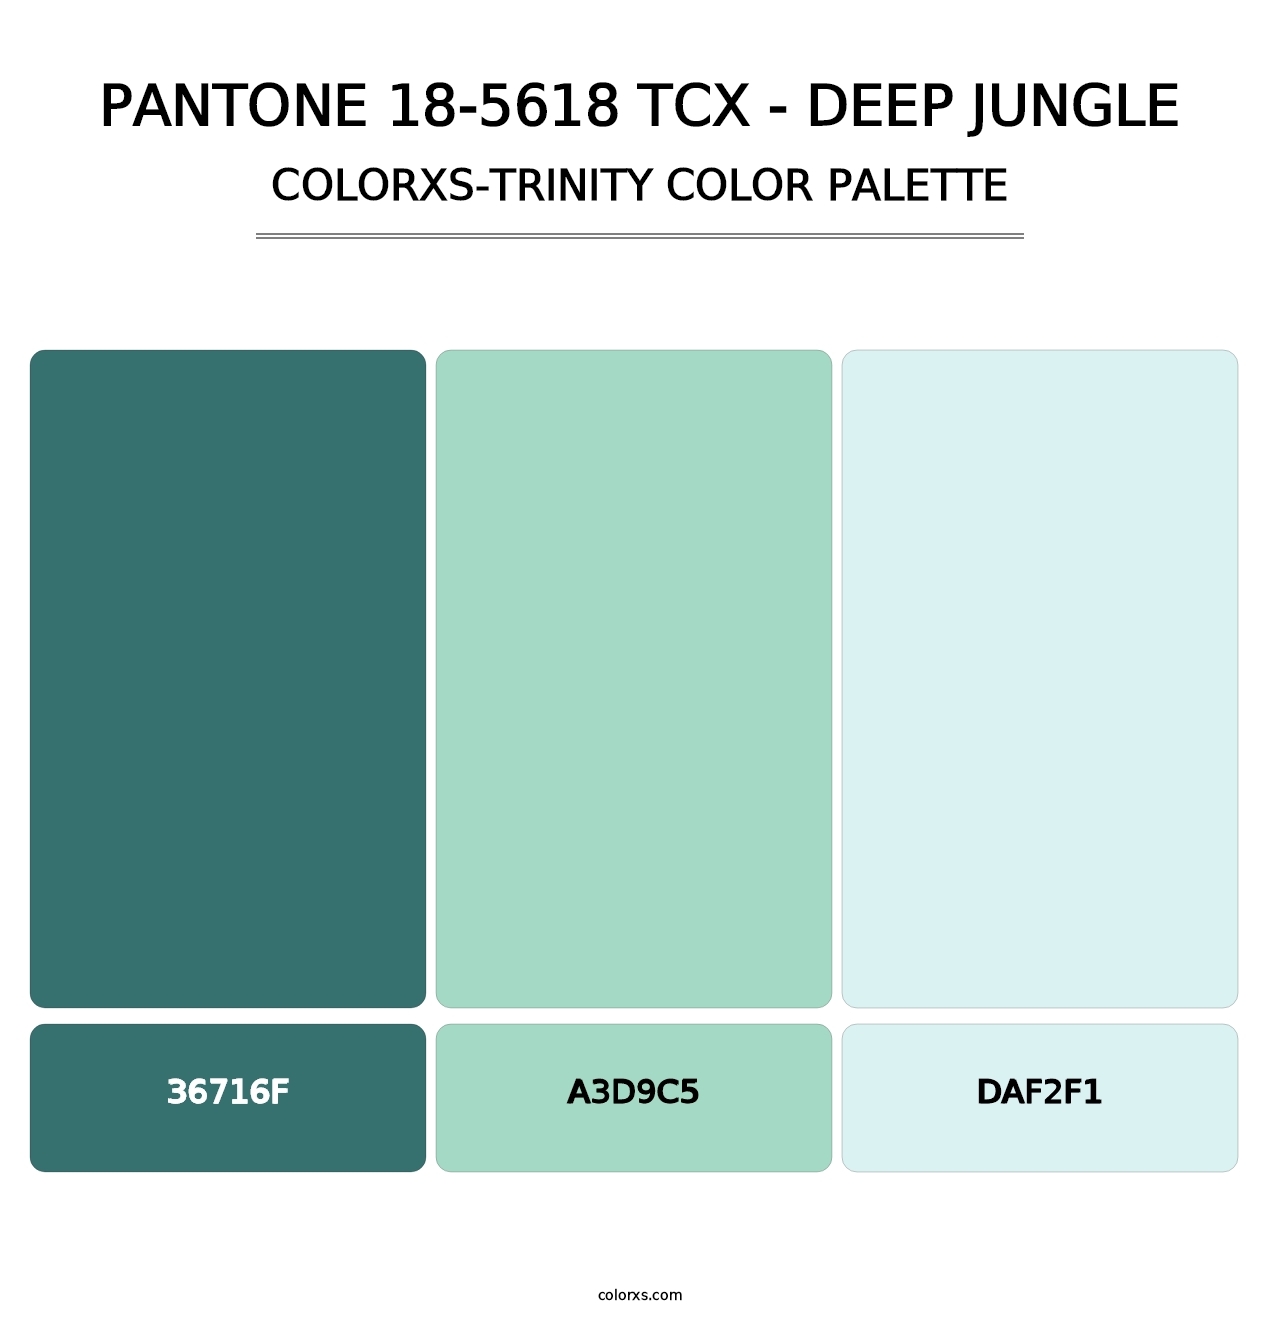 PANTONE 18-5618 TCX - Deep Jungle - Colorxs Trinity Palette